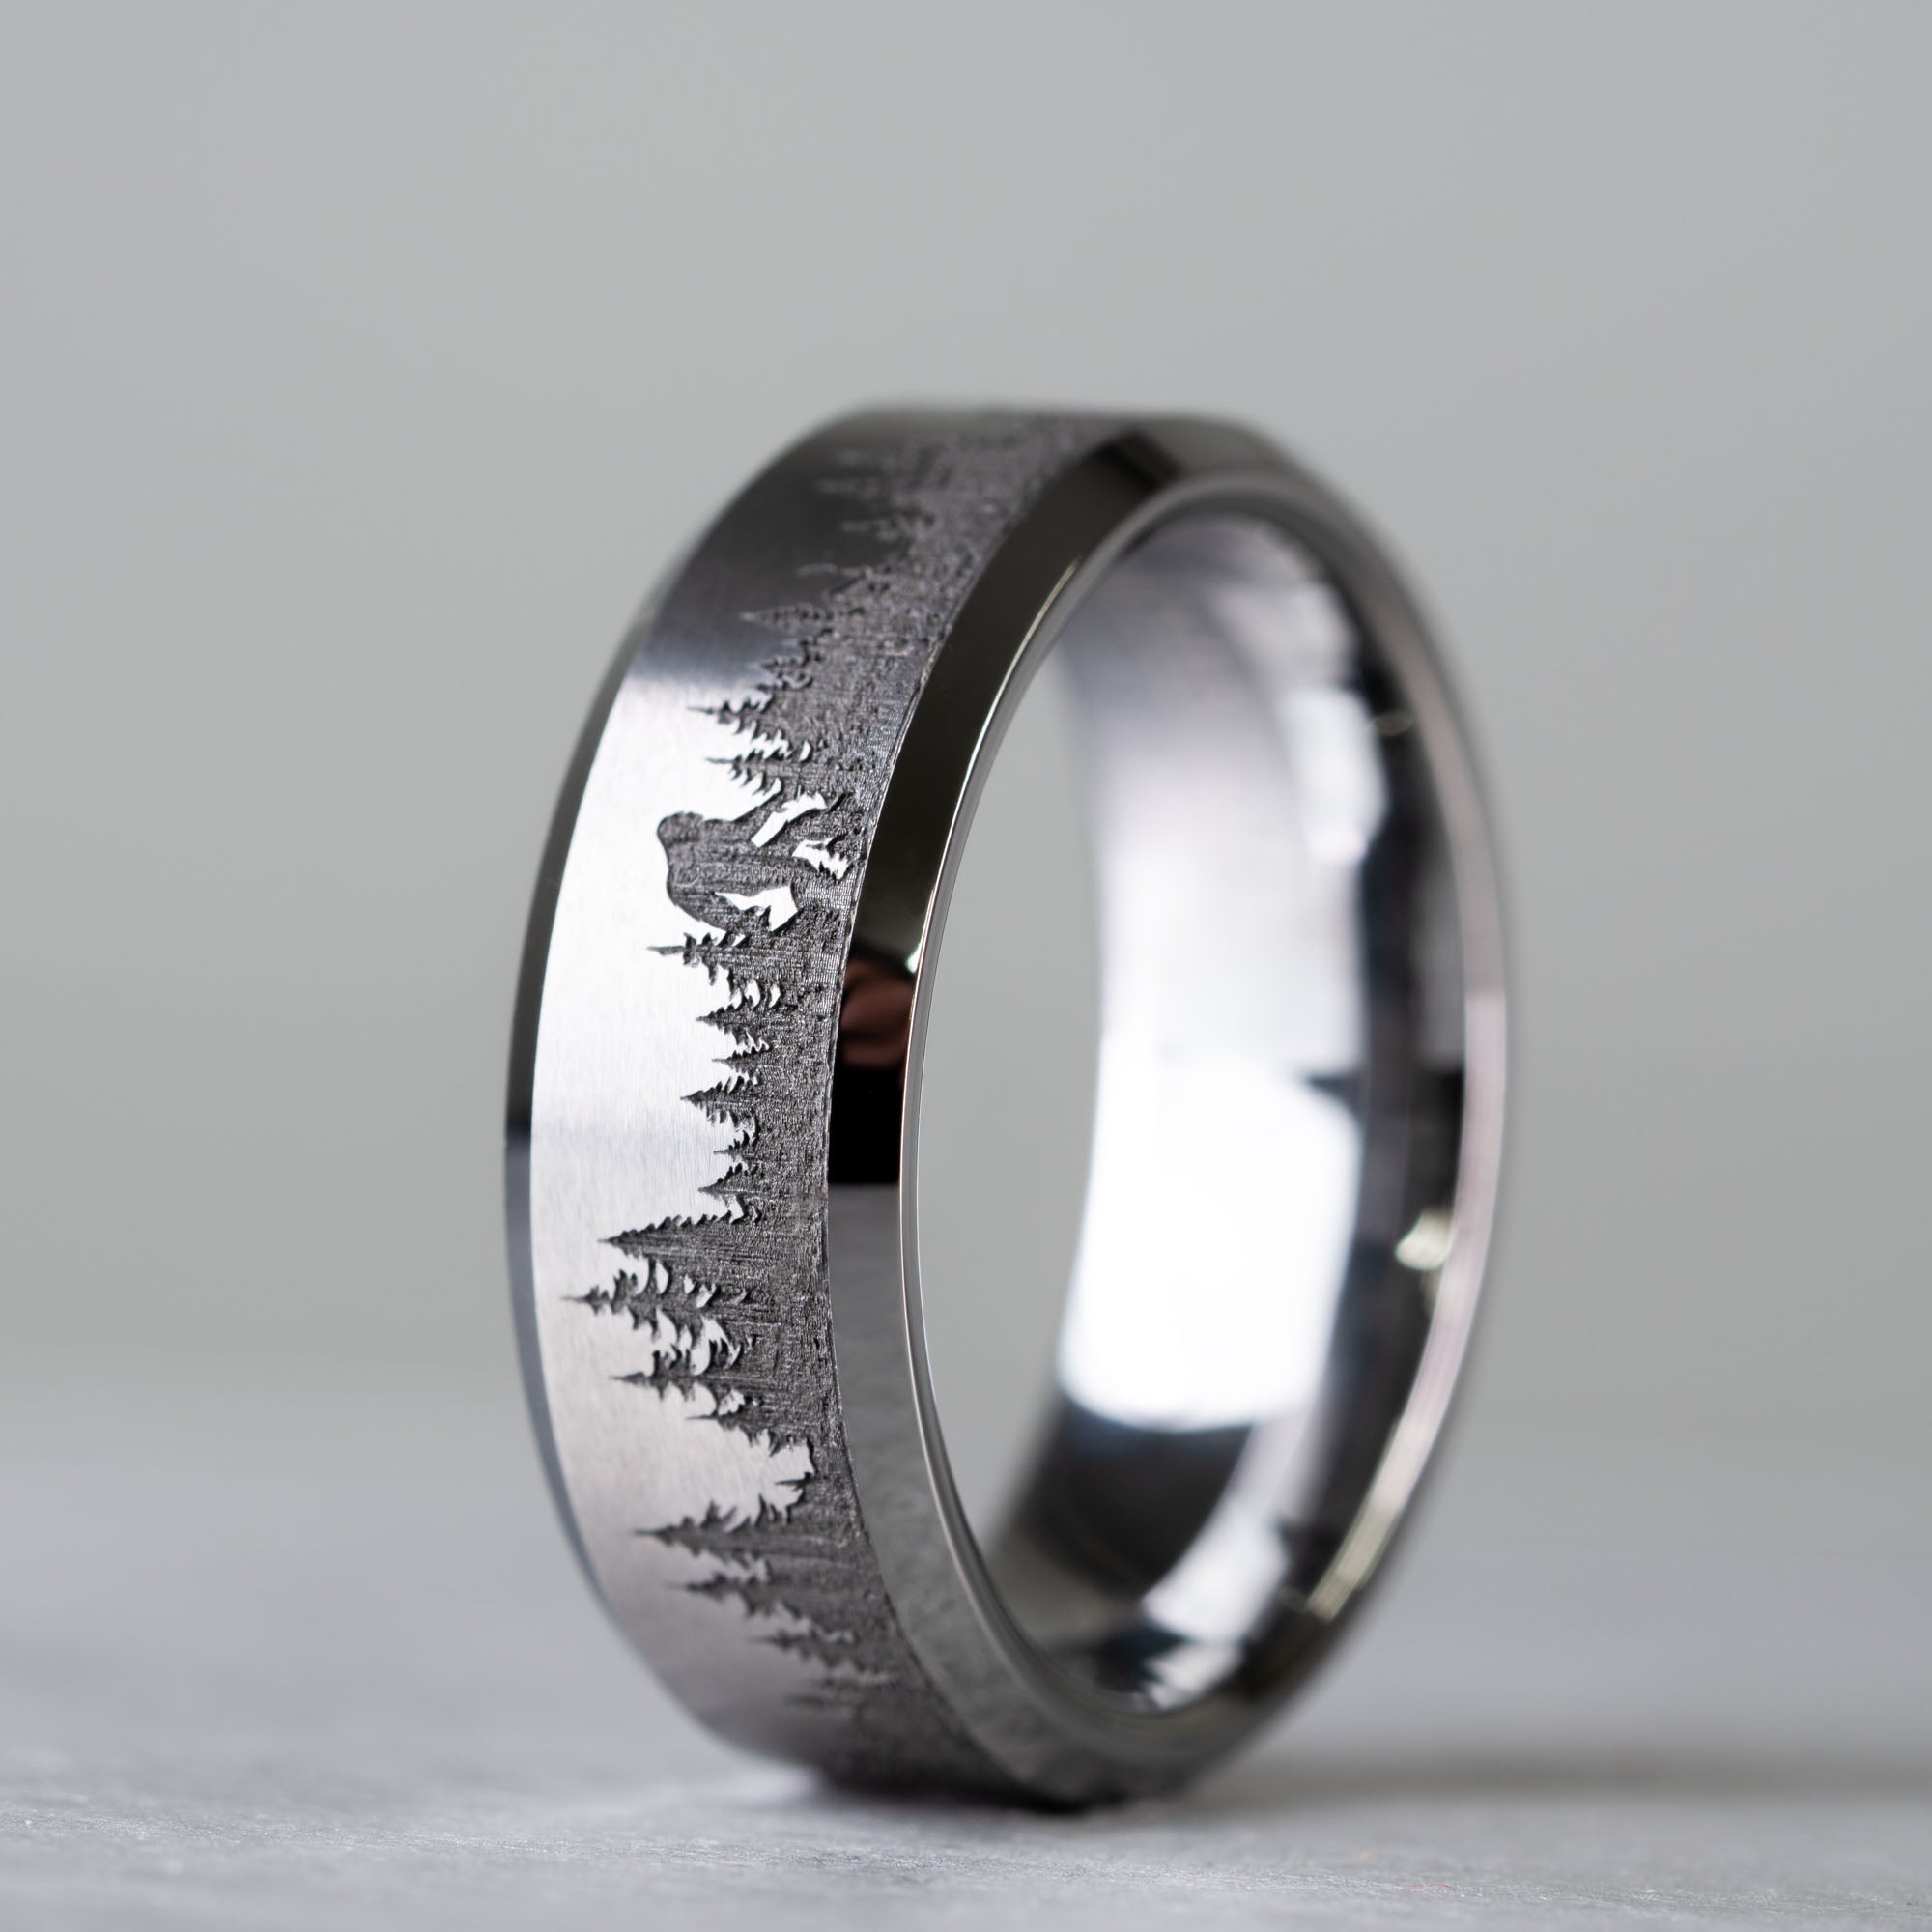 Beveled Tungsten Engraved Sasquatch Sighting Ring